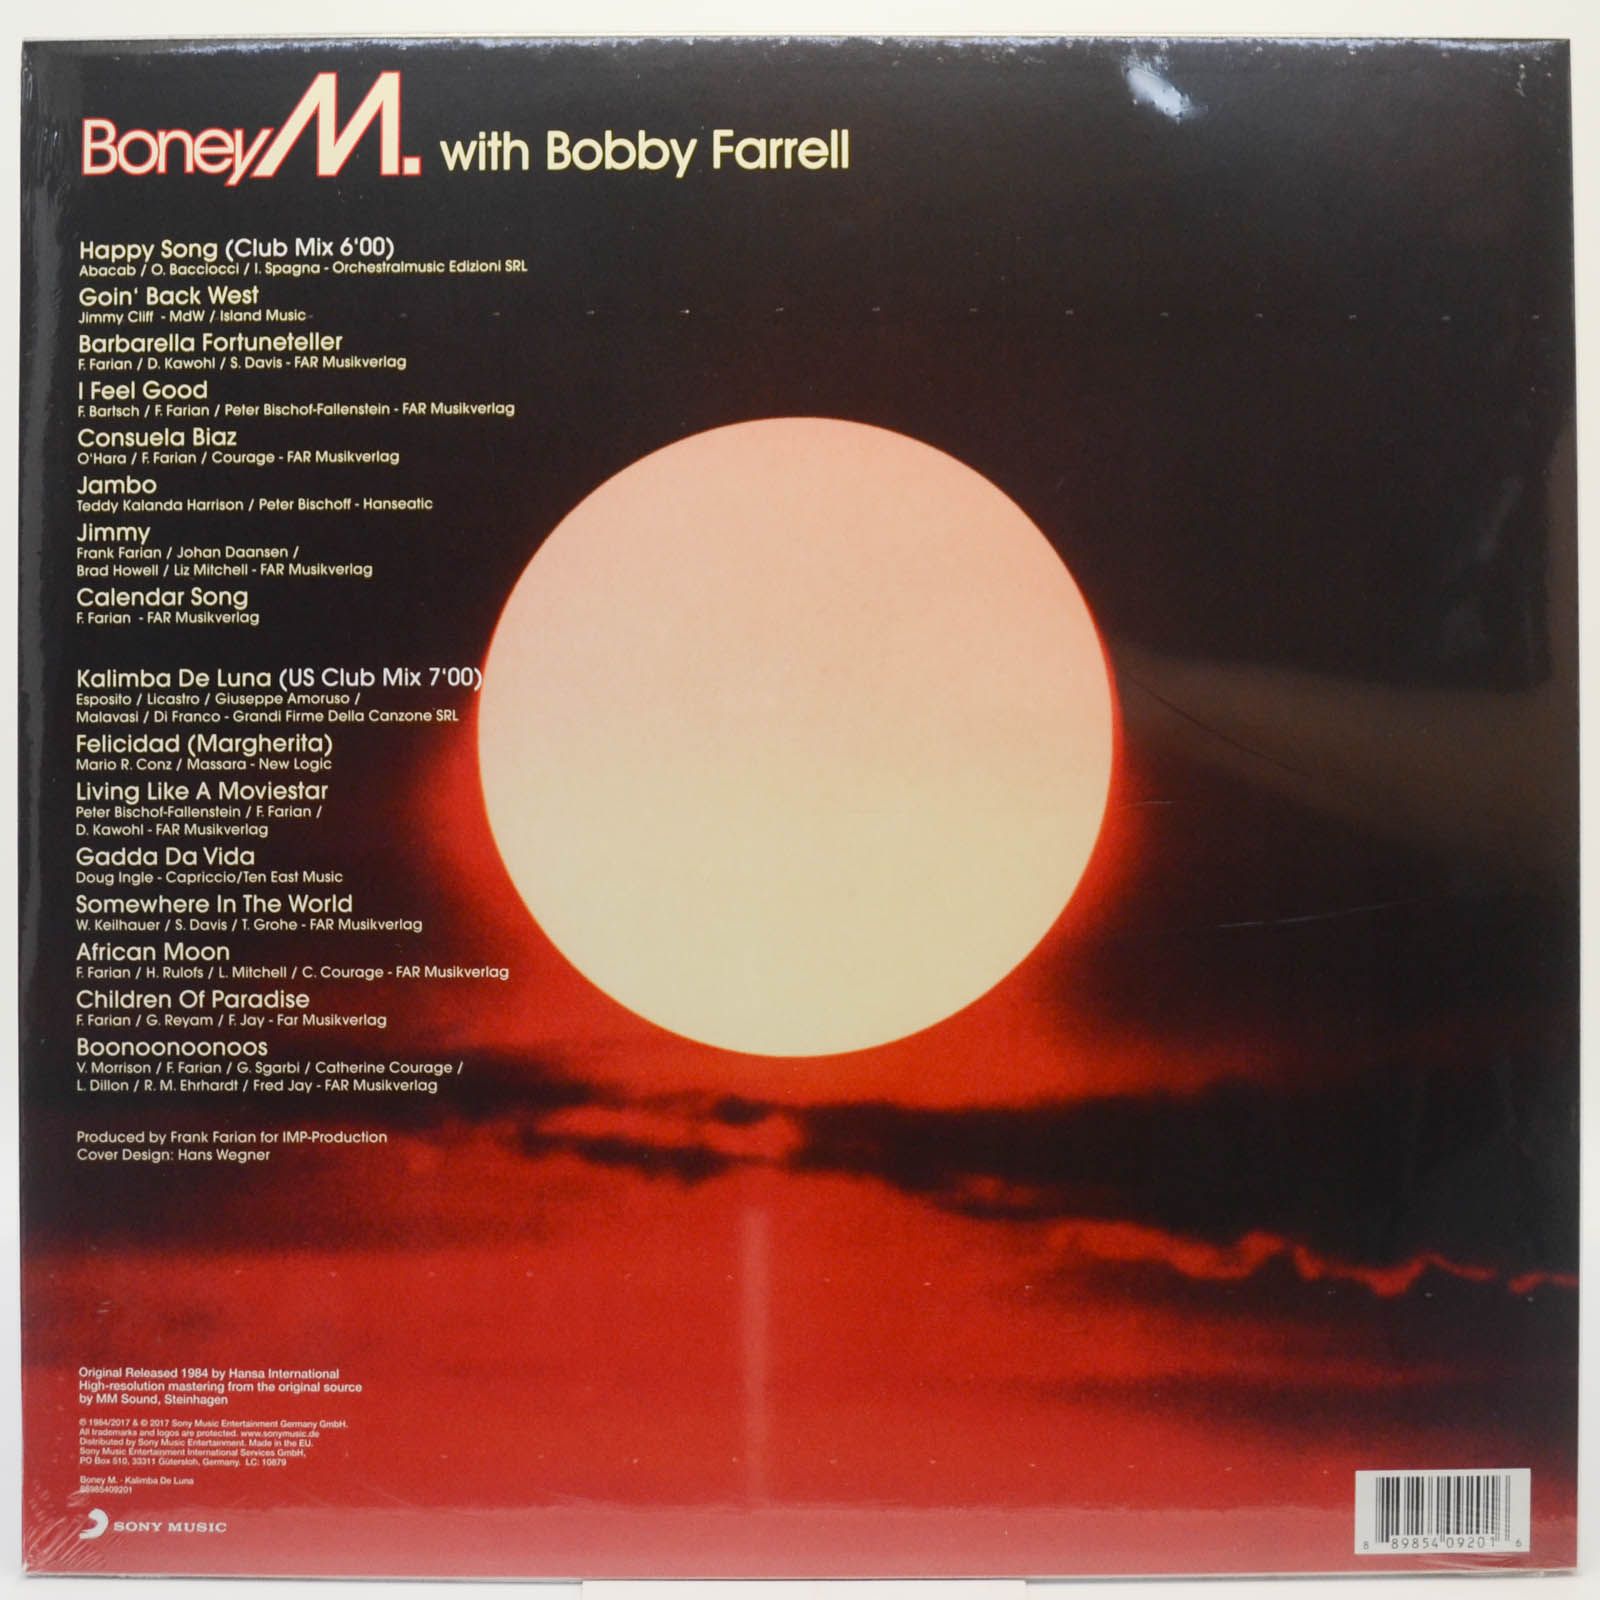 Boney M. — Kalimba De Luna (16 Happy Songs), 1984